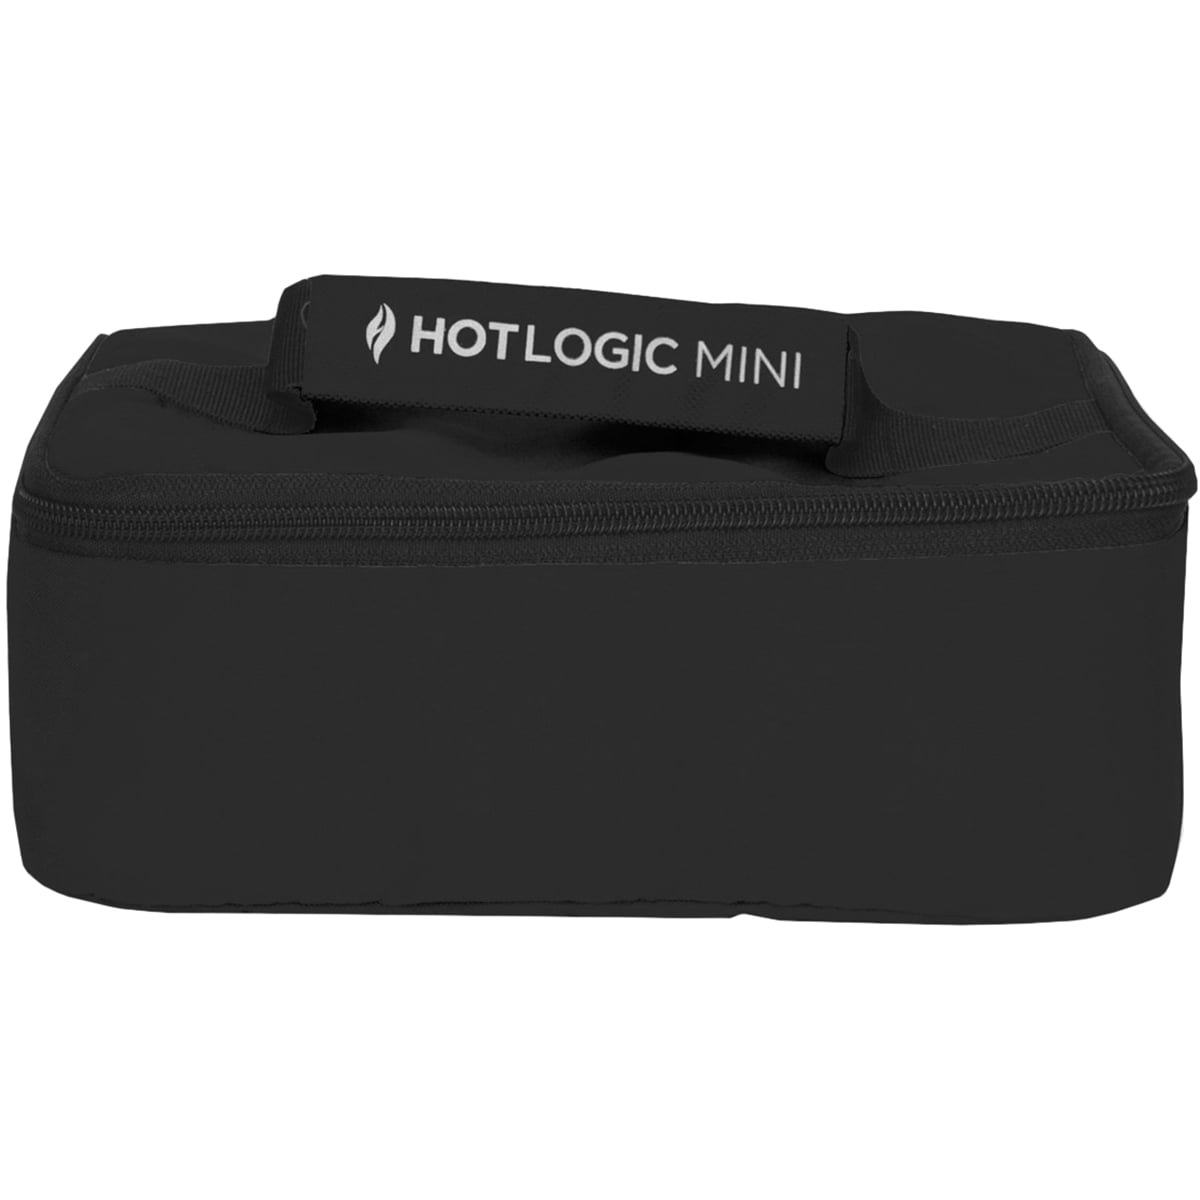 Hotlogic Mini Portable Oven (Purple)